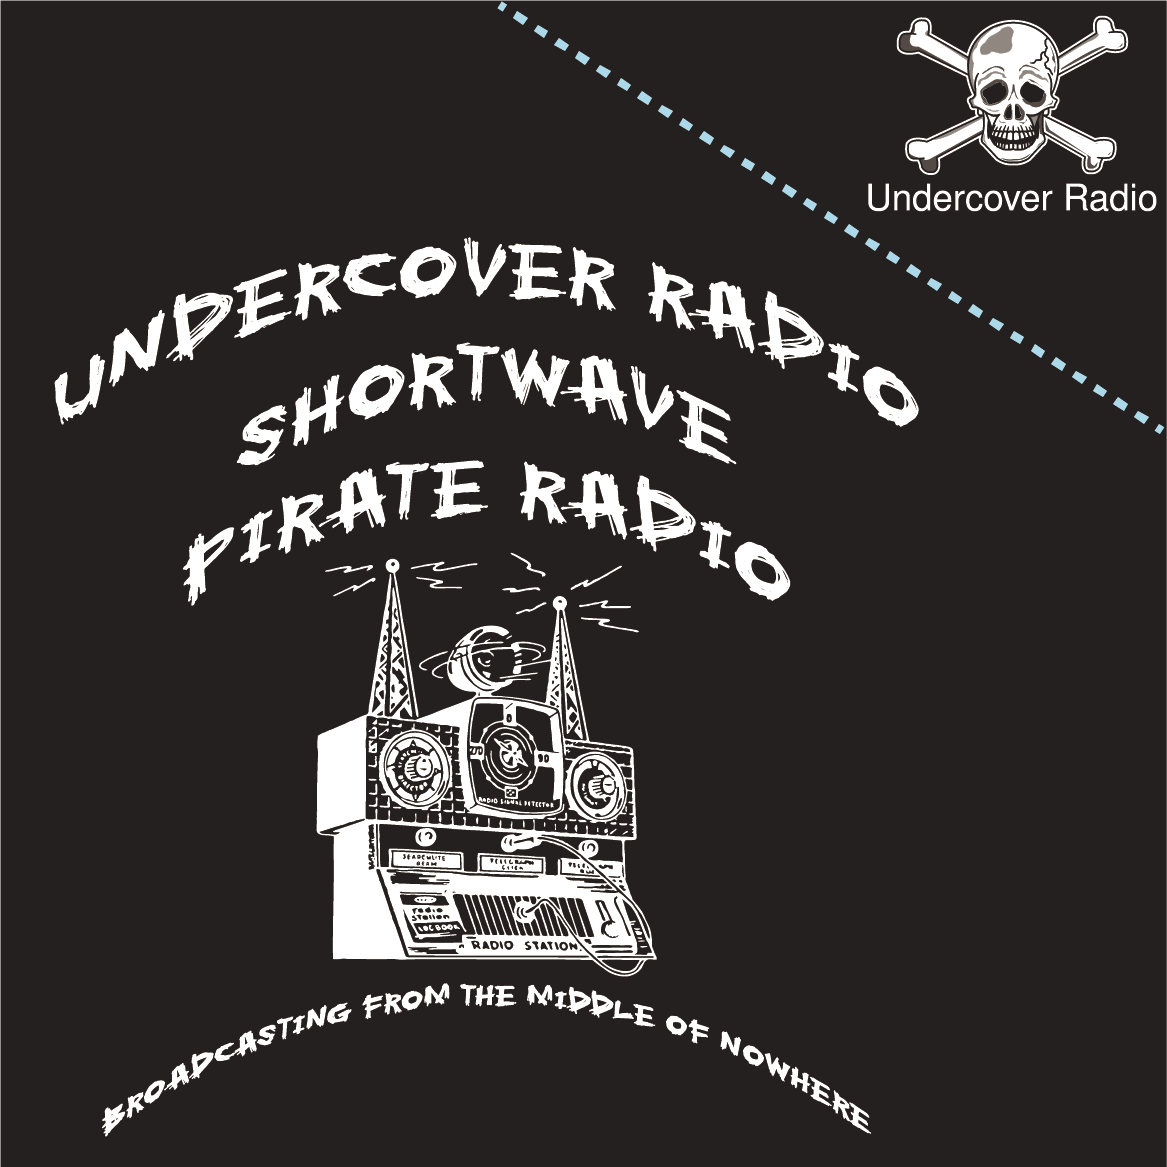 Undercover Radio t-shirt fundraiser shirt design - zoomed